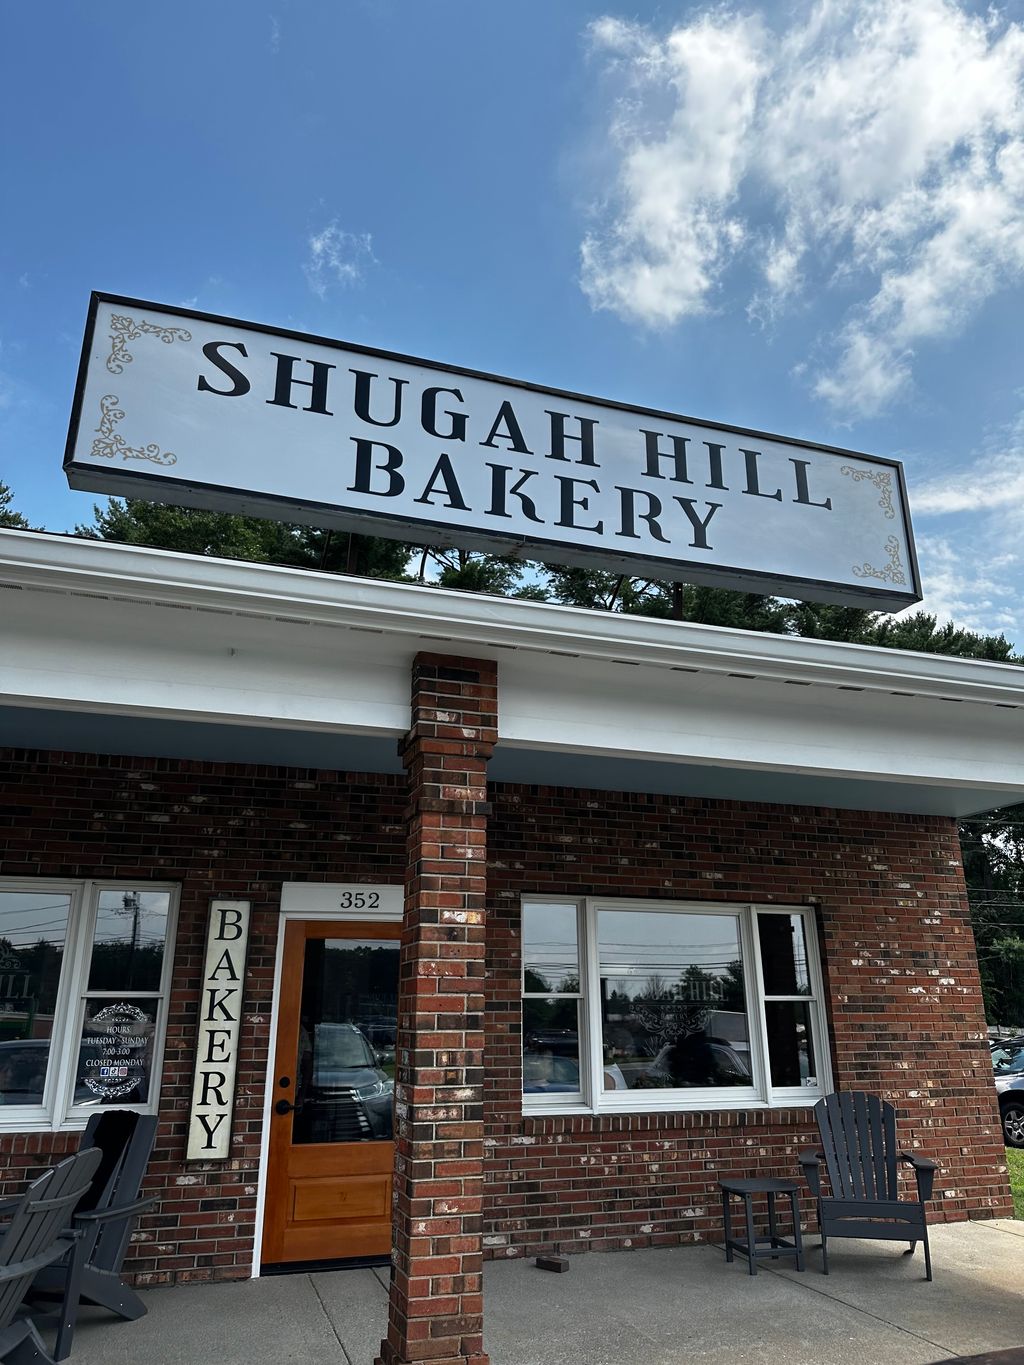 Shugah-Hill-Bakery